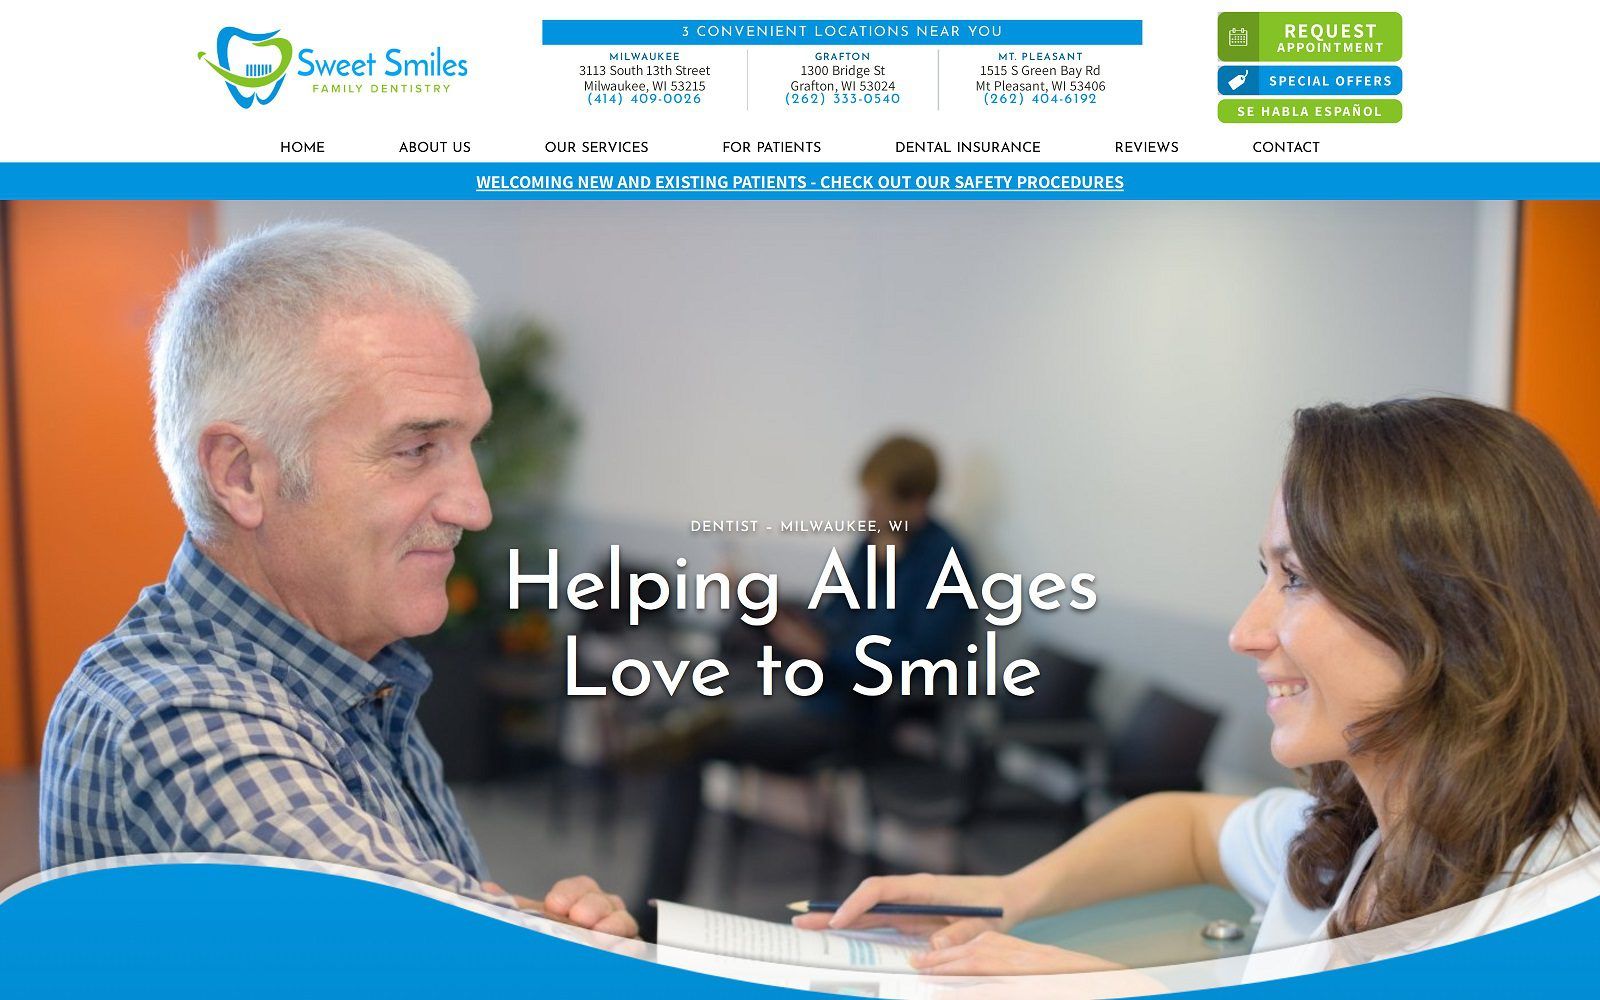 The Screenshot of Sweet Smiles Family Dentistry Website